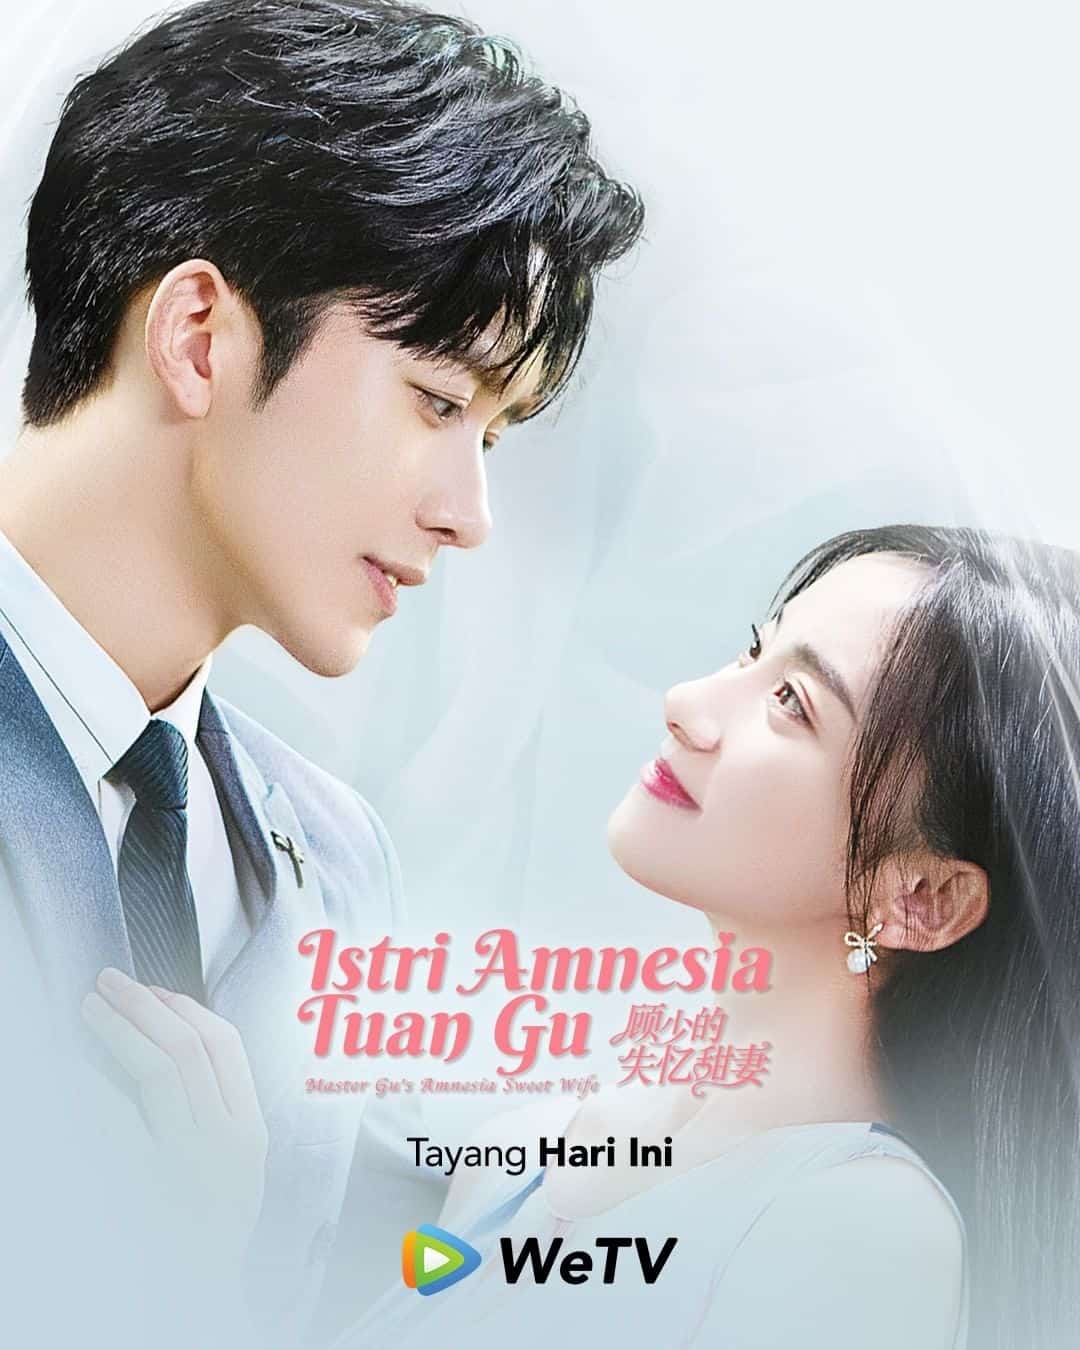 Master Gu's Amnesia Sweet Wife - Sinopsis, Pemain, OST, Episode, Review